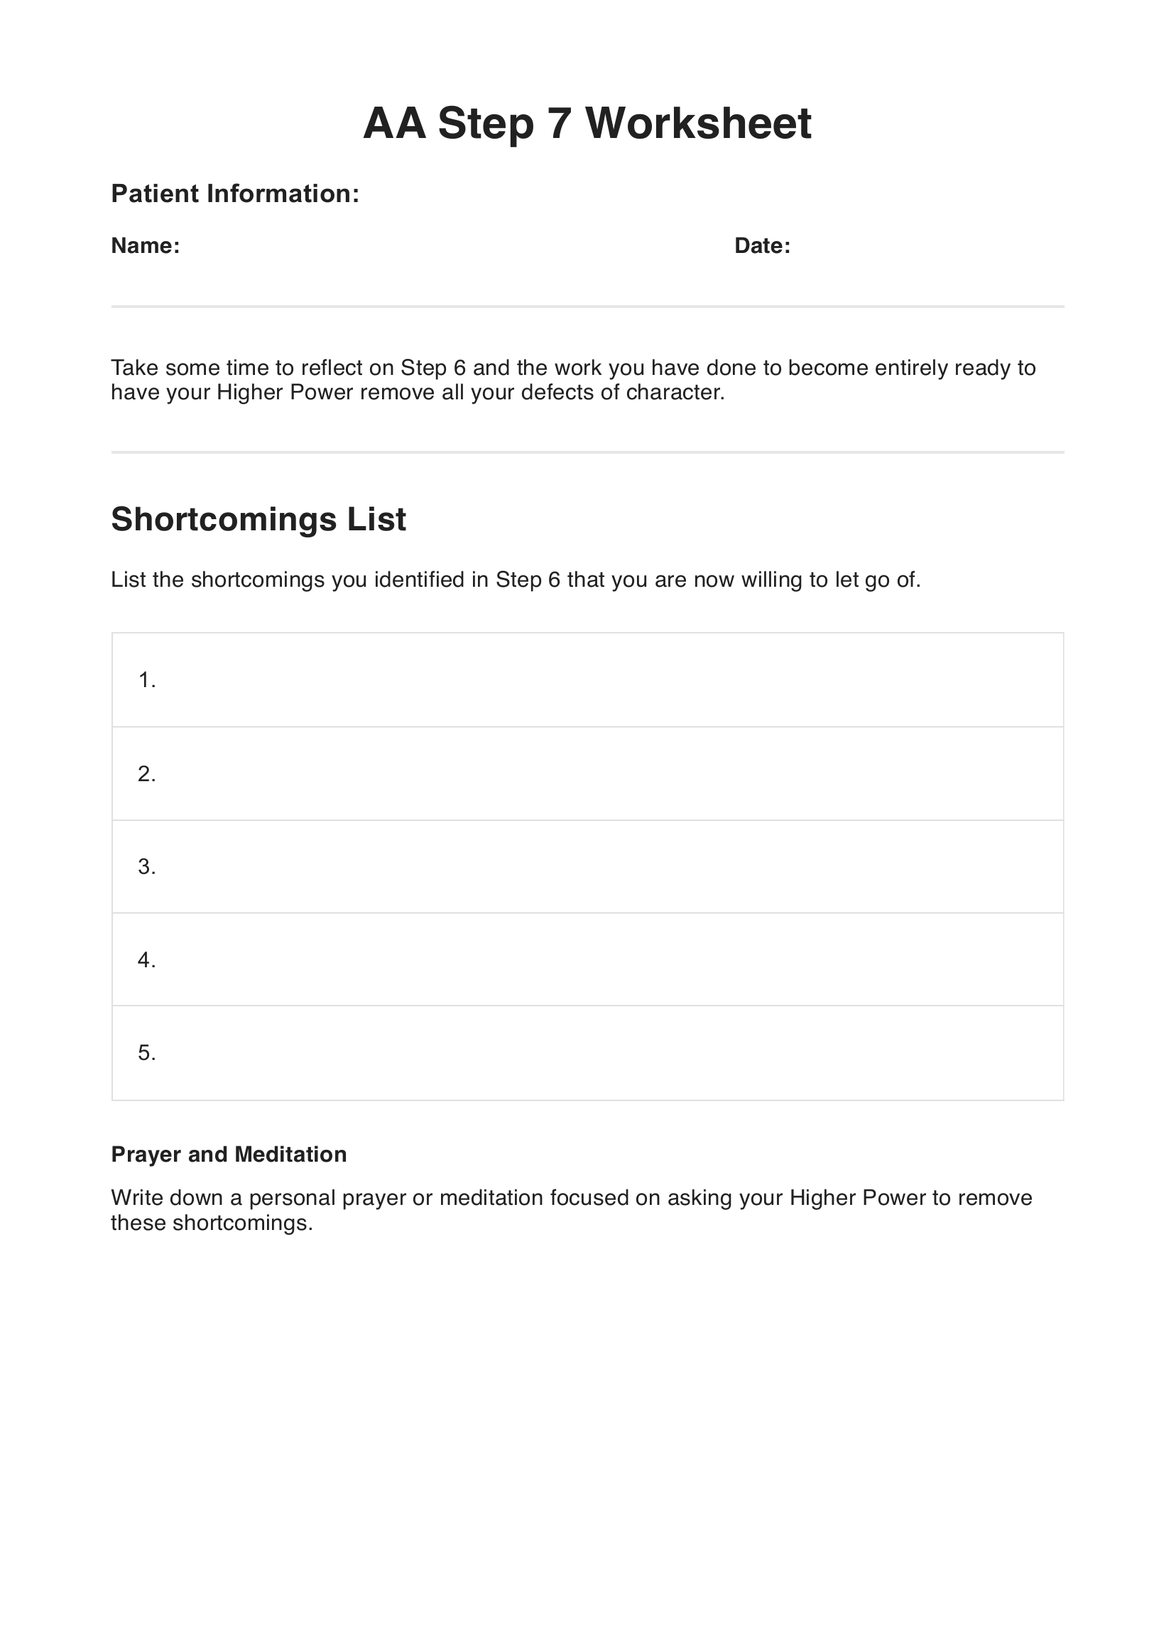 AA Step 7 Worksheets PDF Example